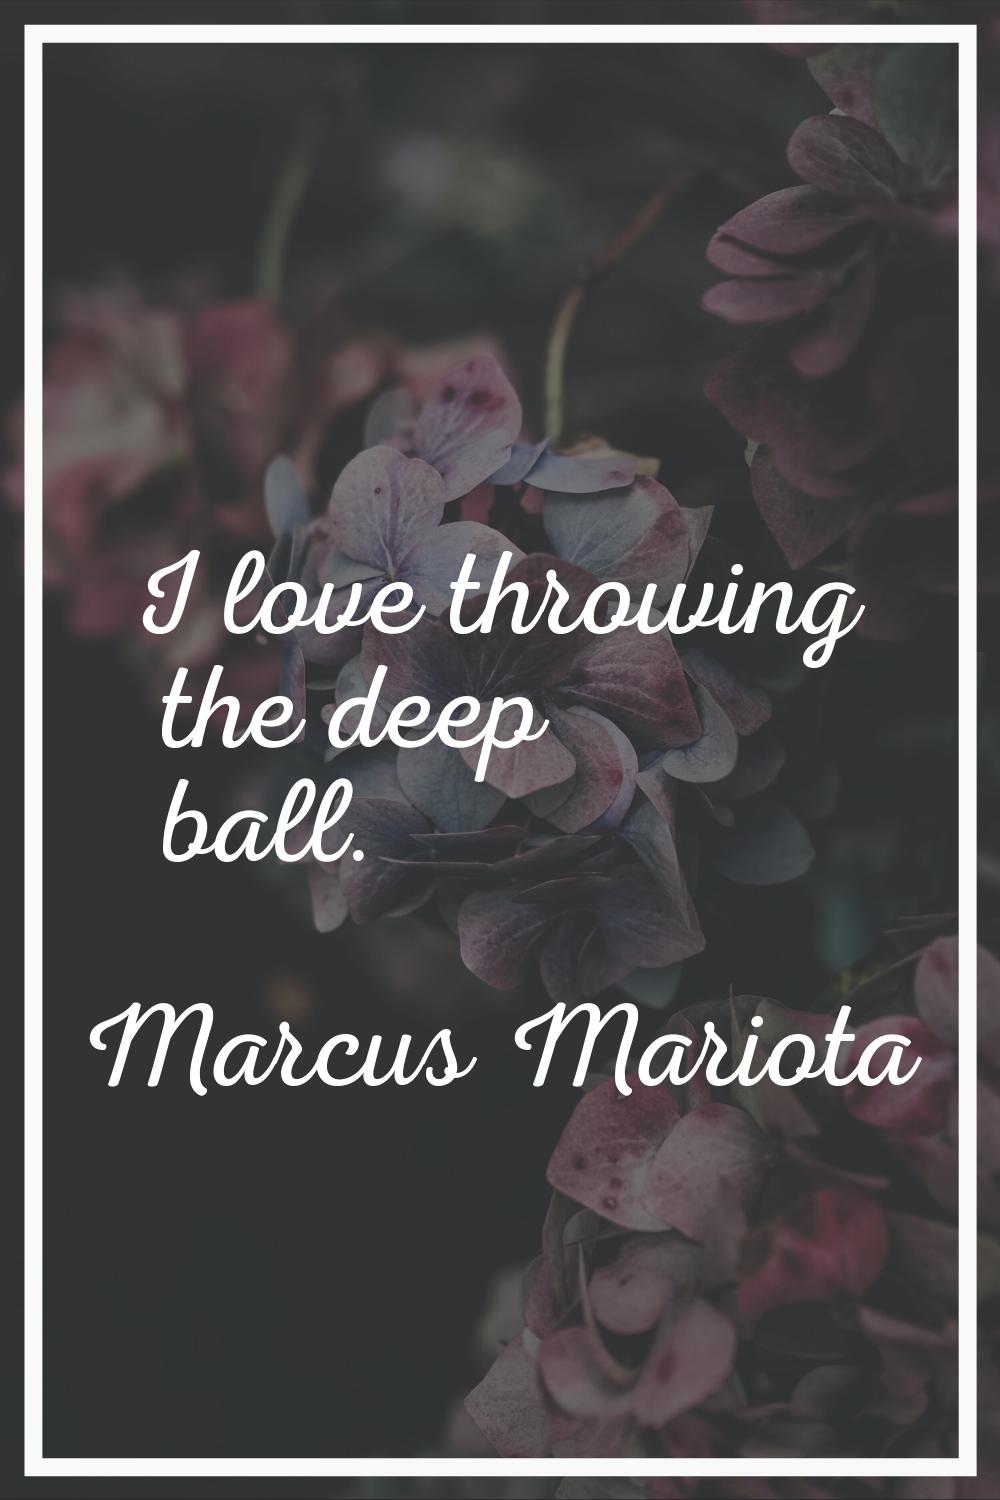 I love throwing the deep ball.